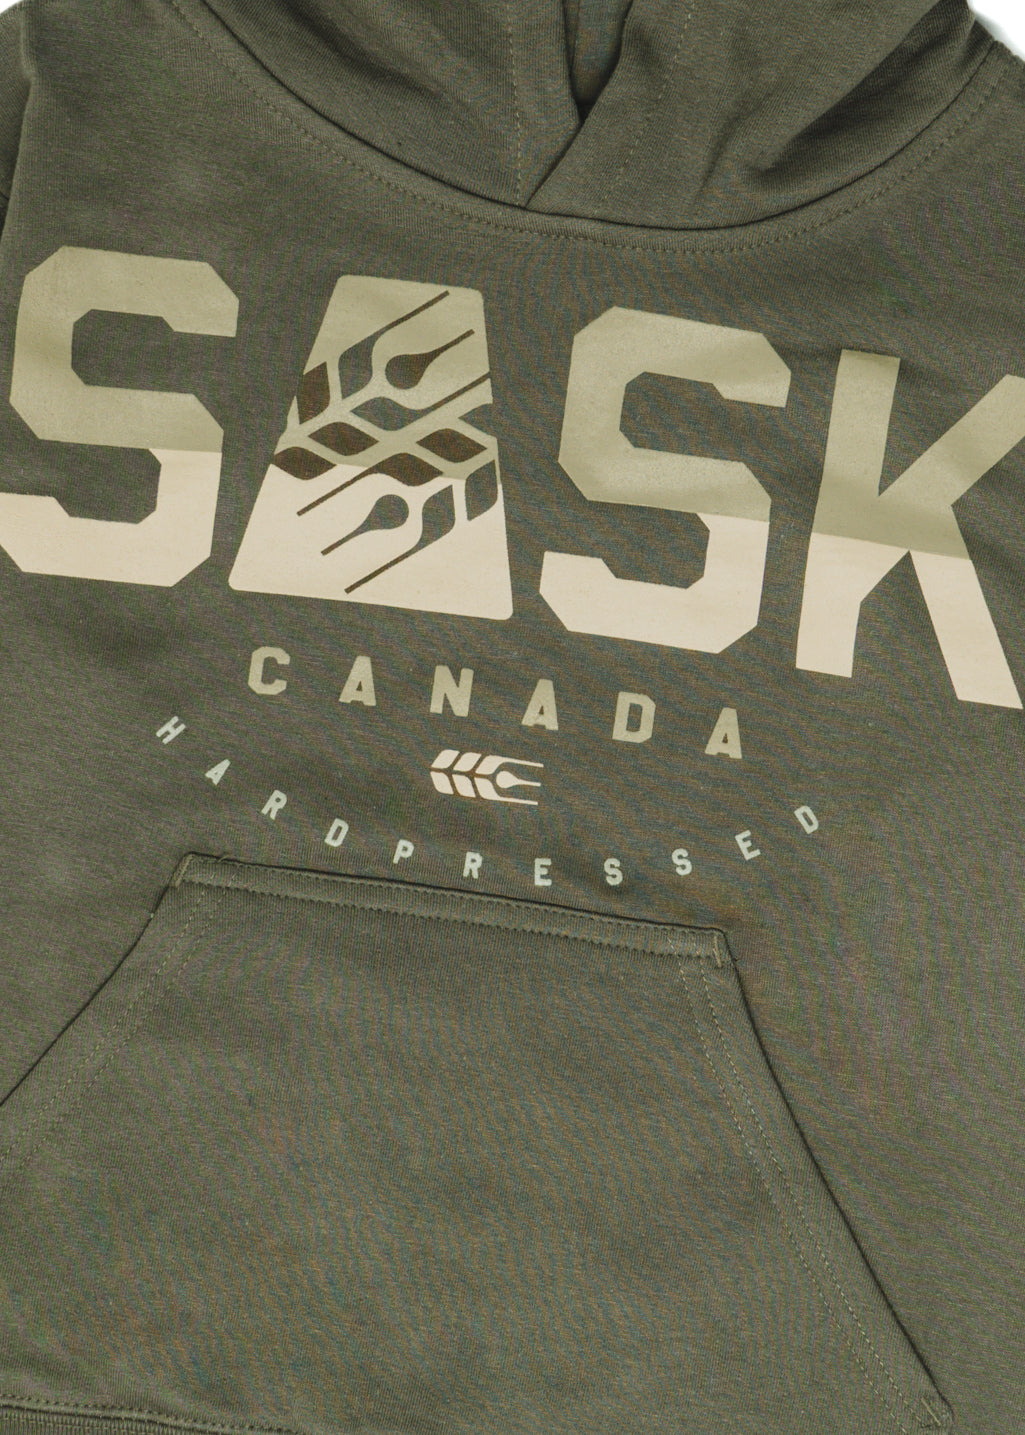 SASK Icon Two Tone Sweater | Foliage | Kids - Hardpressed Print Studio Inc.